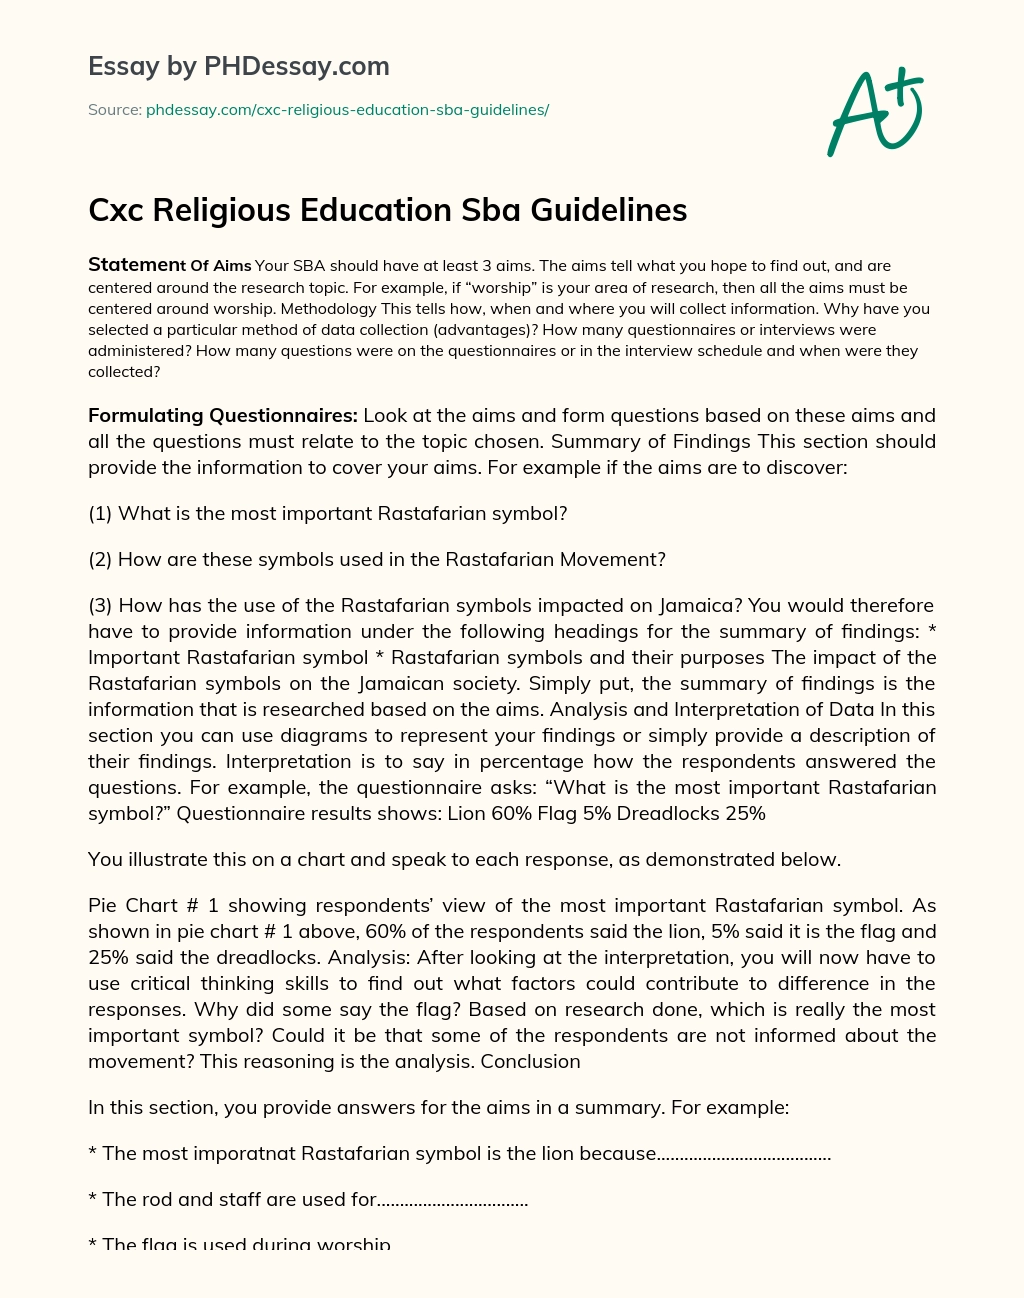 Cxc Religious Education Sba Guidelines essay